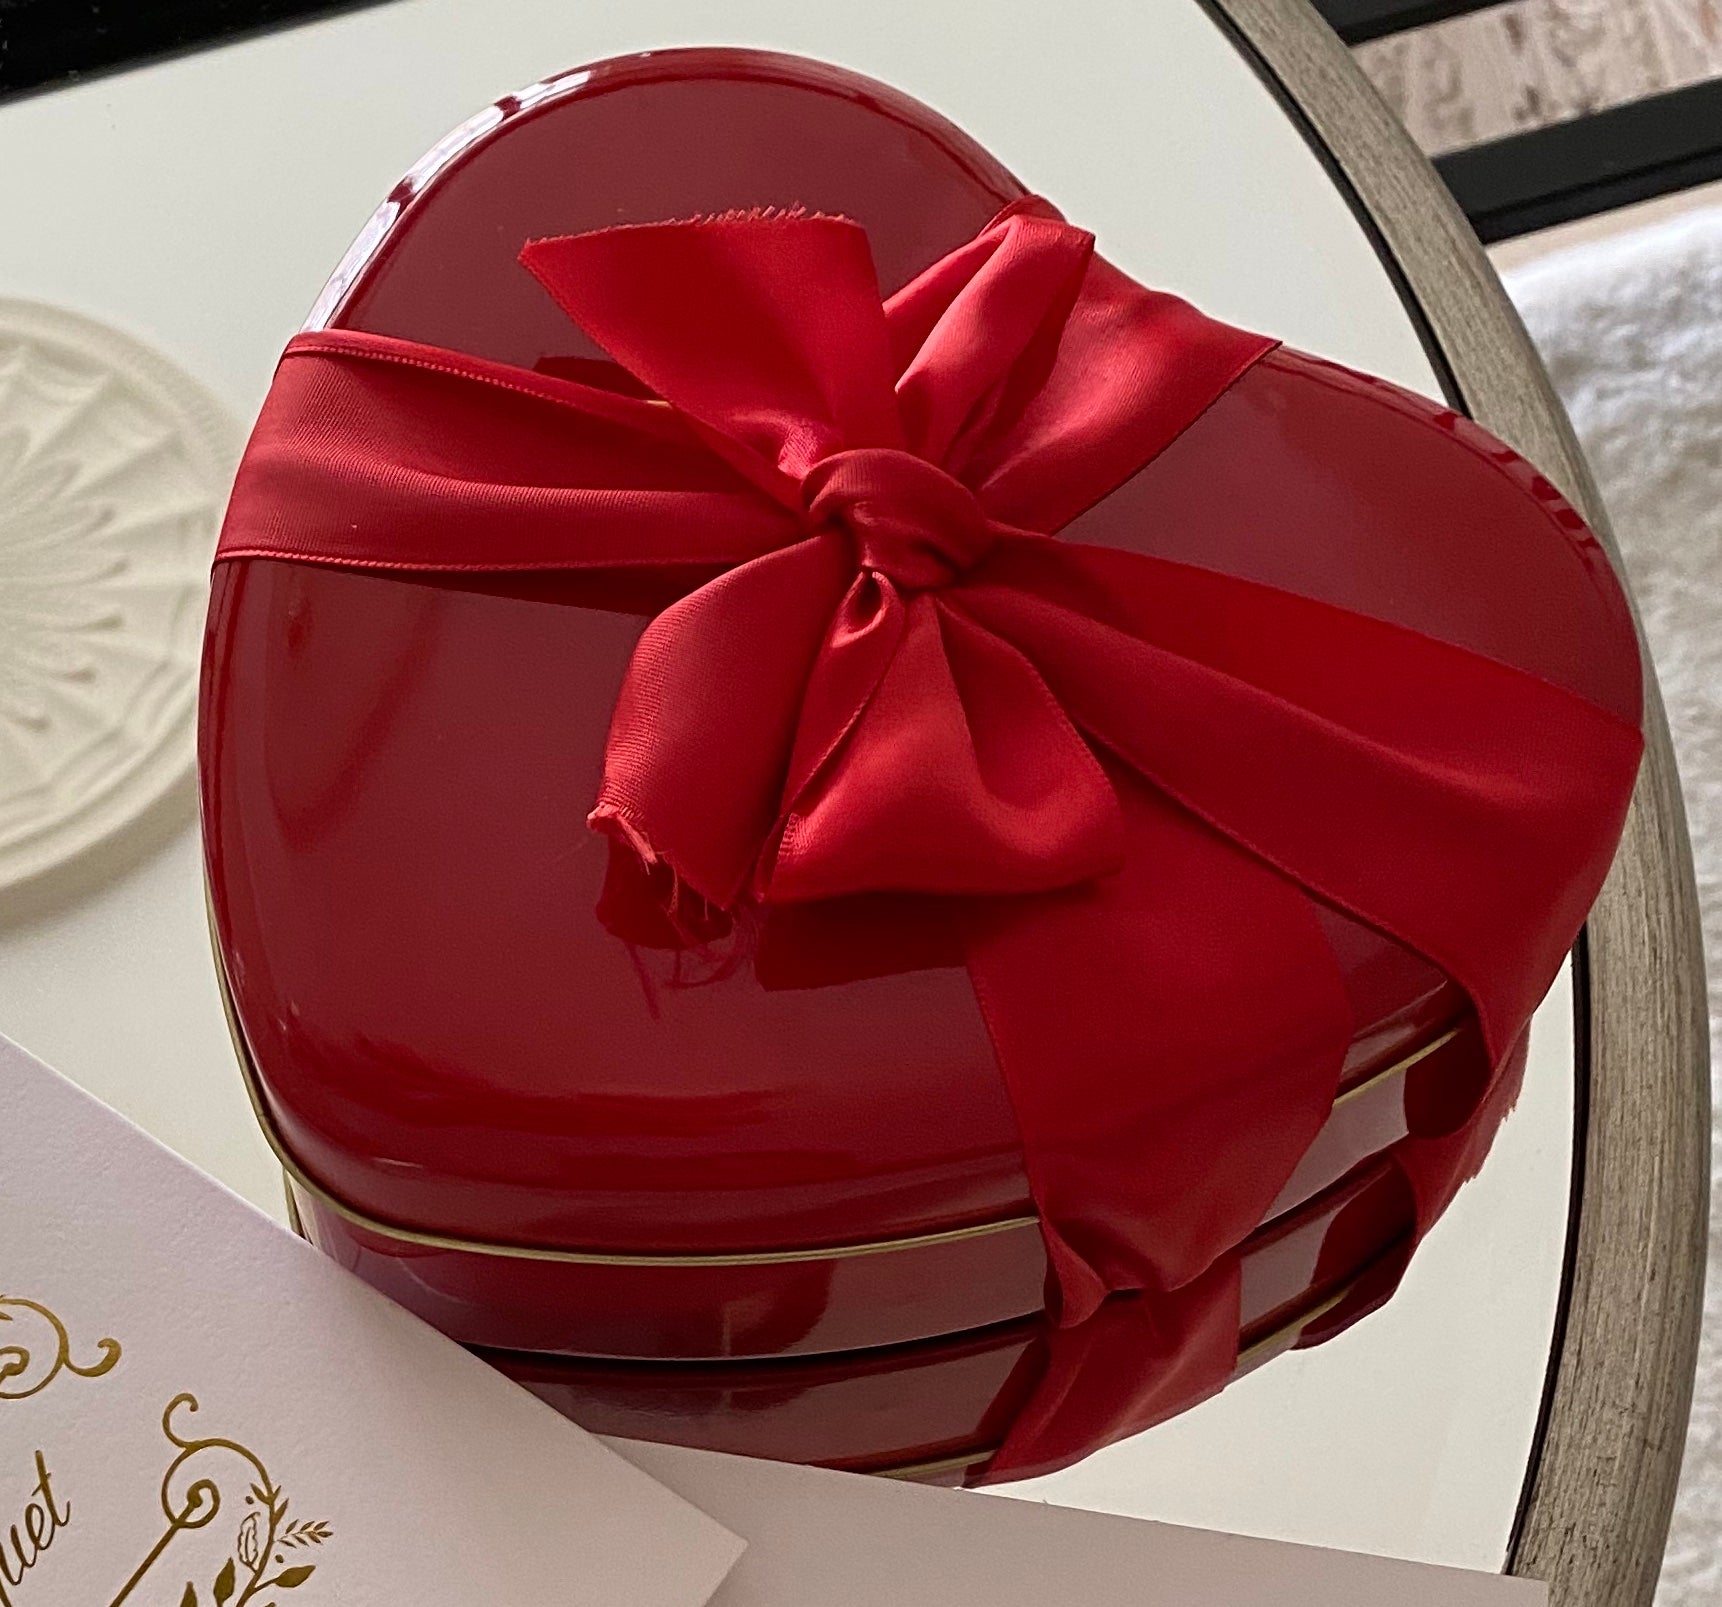 Belgian chocolate hearts - My Lasting Bouquet